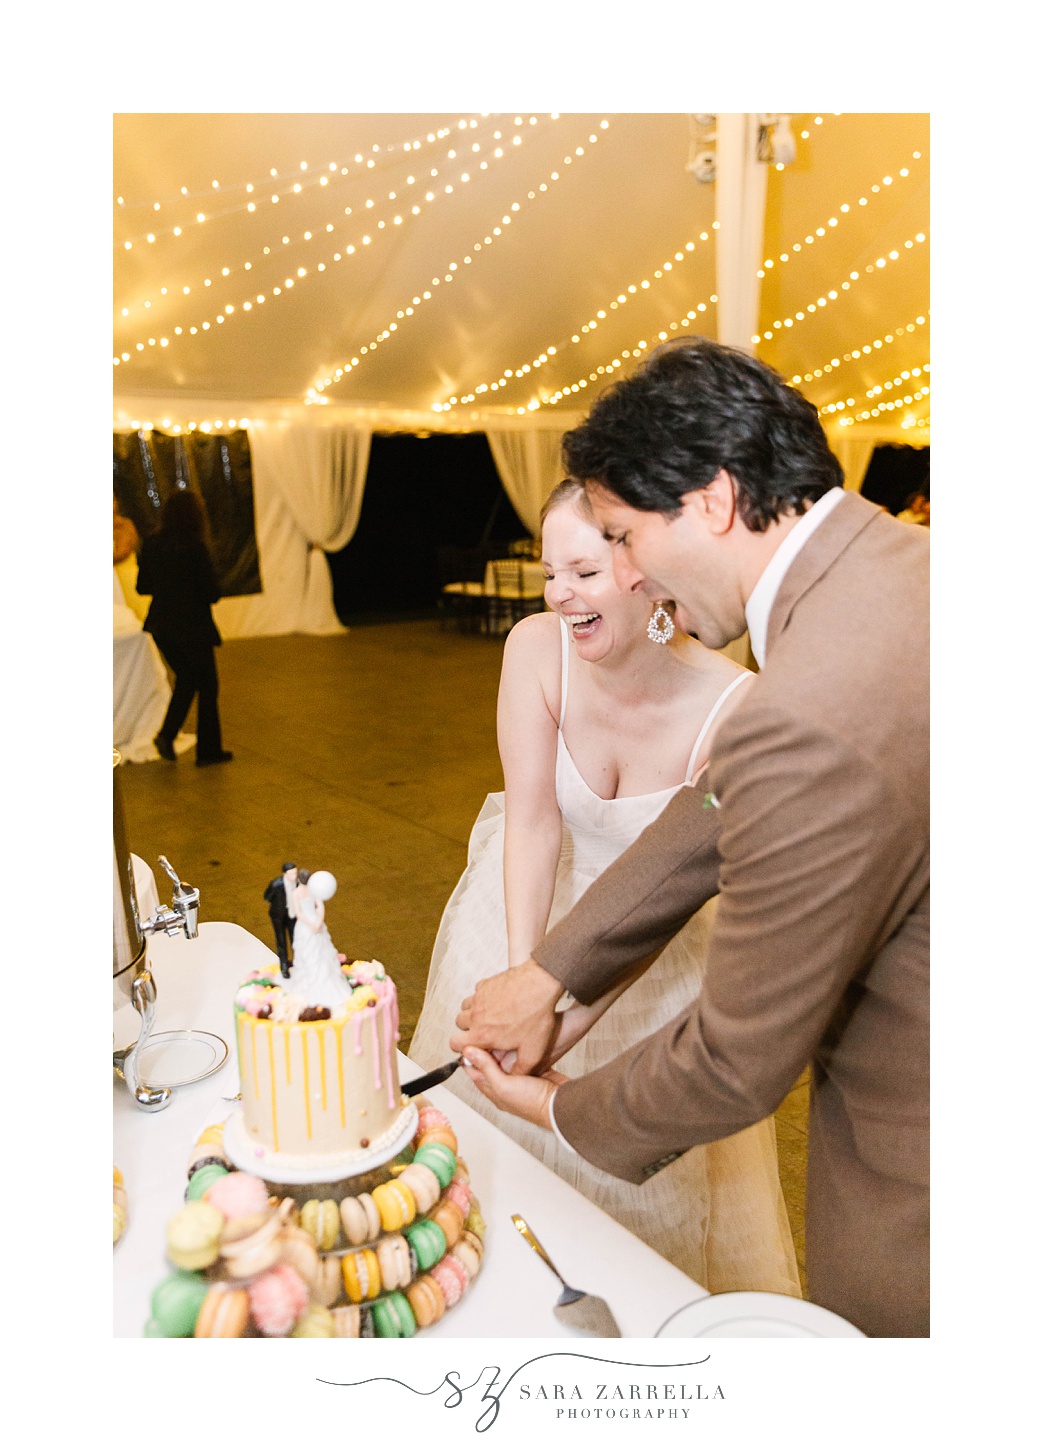 couple cuts wedding cake during RI wedding reception